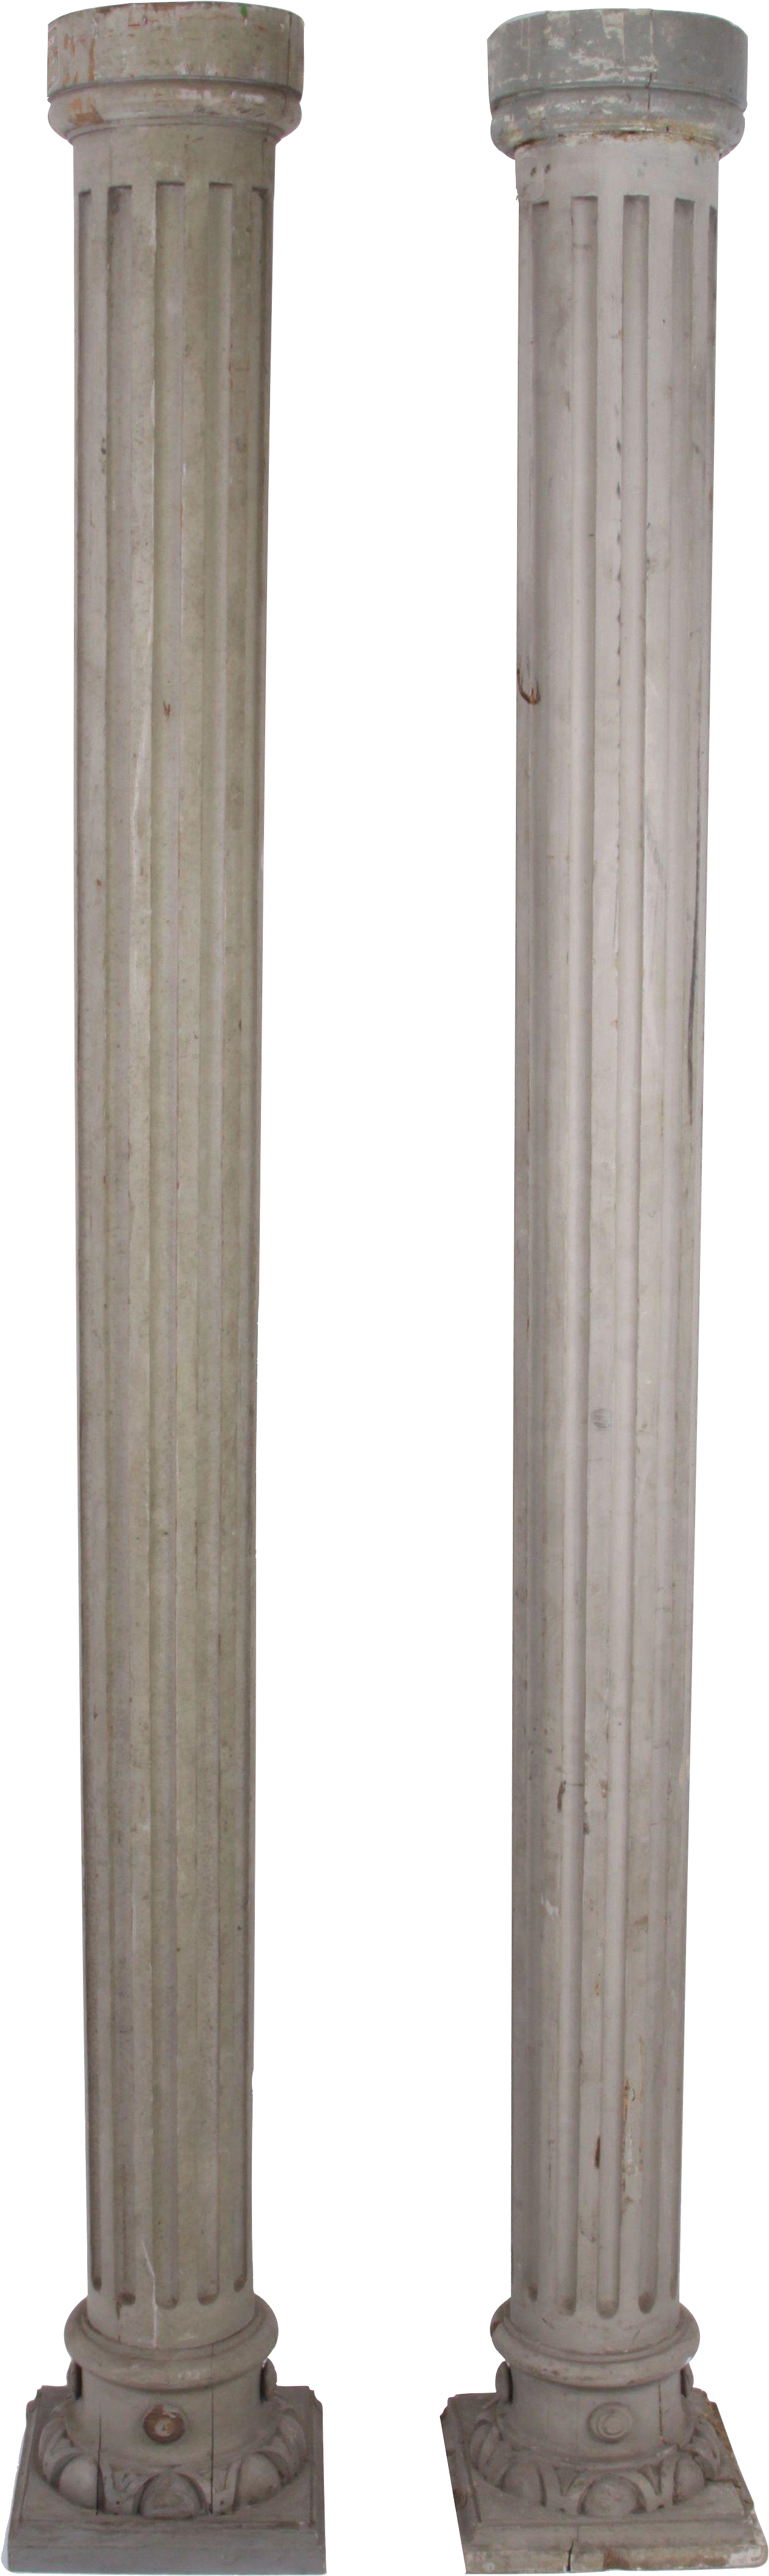 Ancient Stone Columns PNG